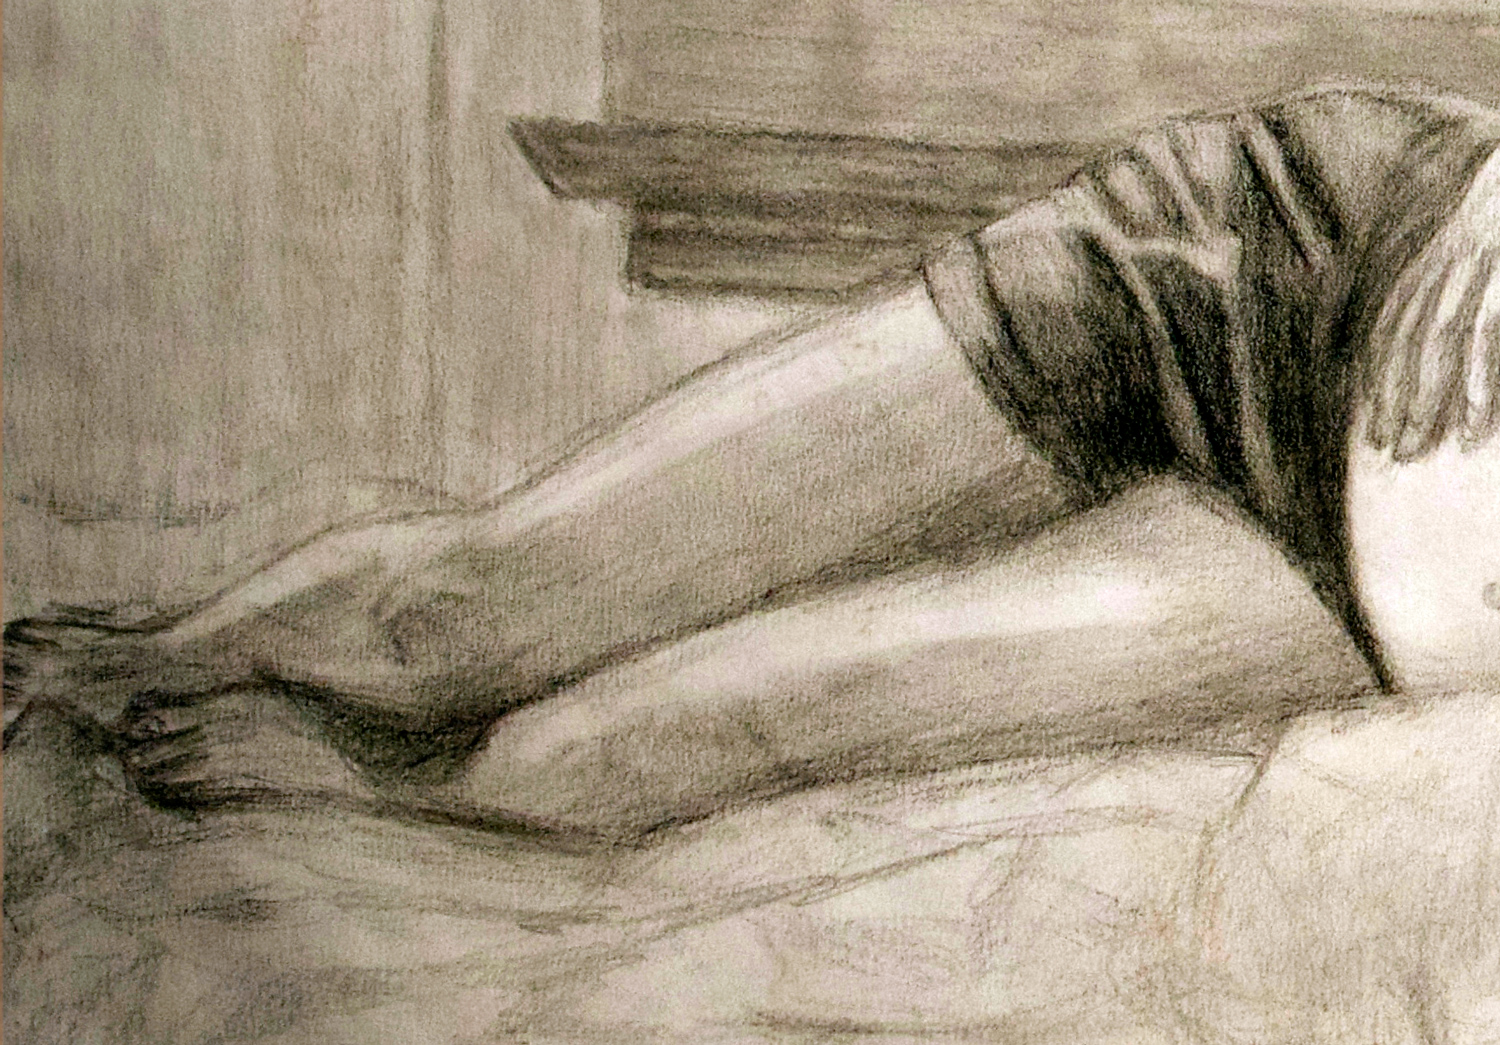 Joanna drawing, by Tara Marolf